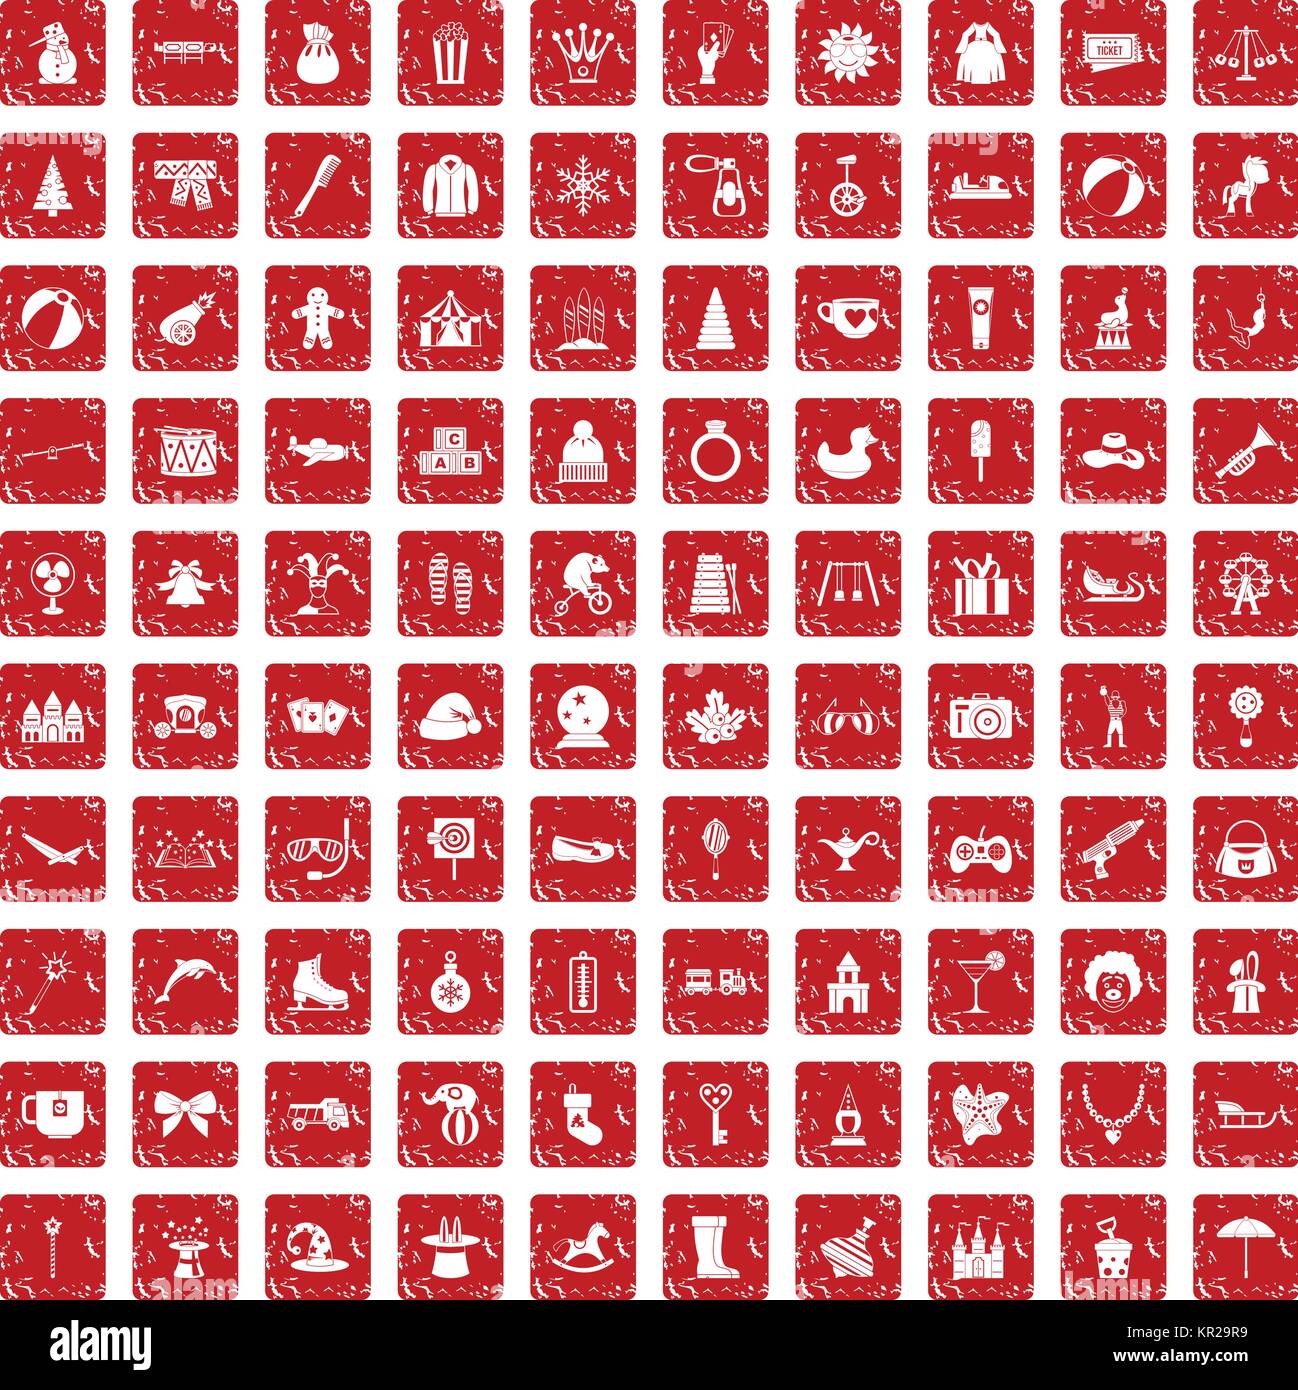 100 Kinder Icons Set grunge Rot Stock Vektor